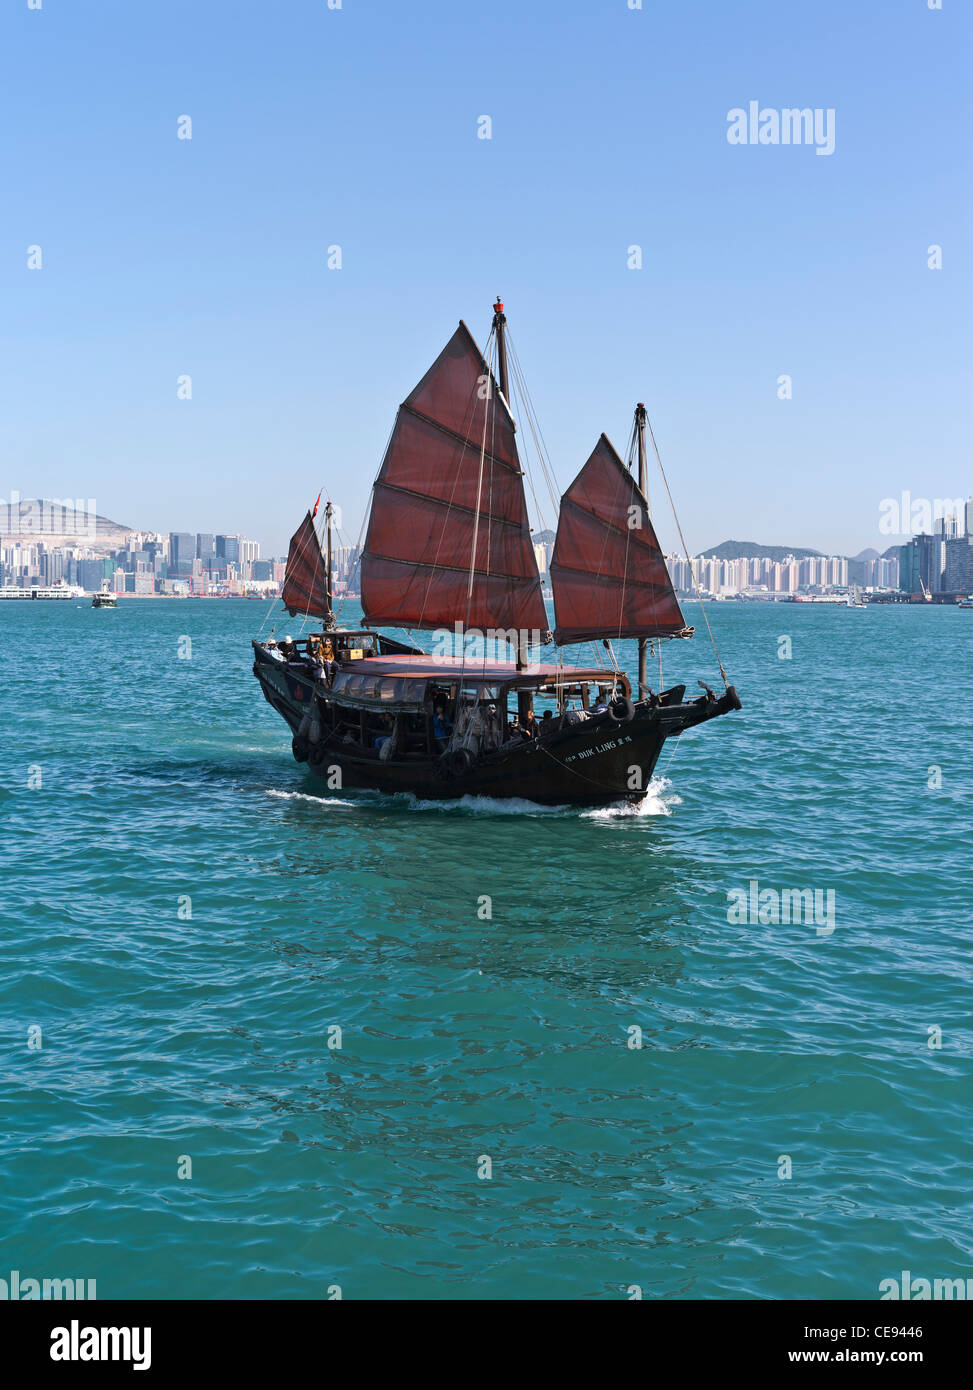 dh Duk Ling Junk VICTORIA HAFEN HAFEN HONG KONG Touristenhafen Red Sail Junk chinesische Attraktion Tourismus Junkboat Schiff Segel Boot Stockfoto